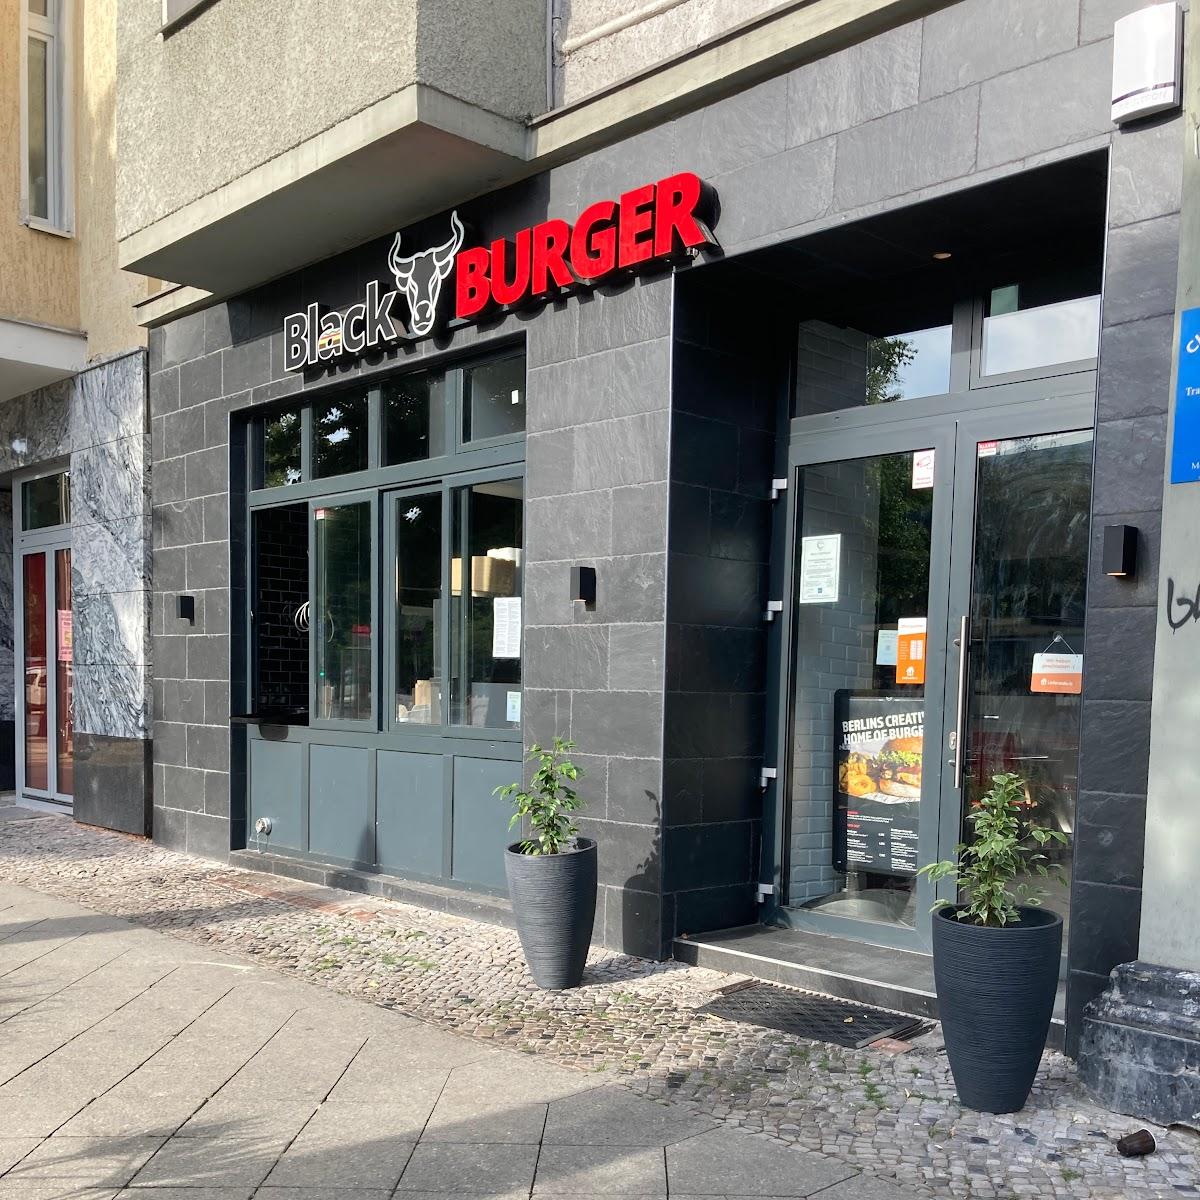 Restaurant "Black Burger" in Berlin